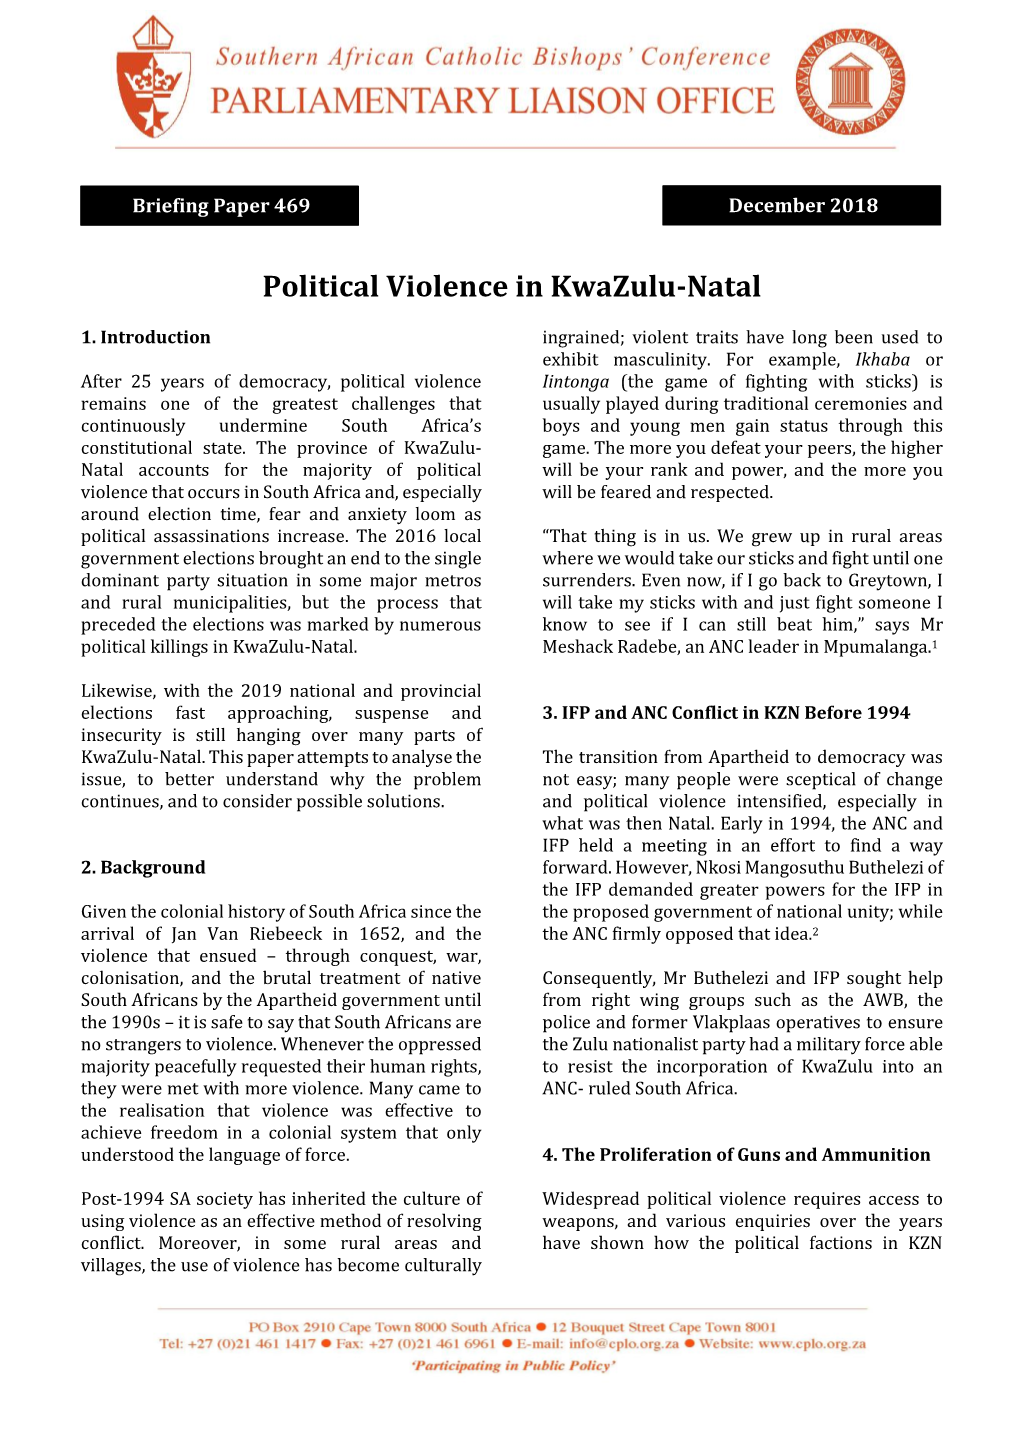 Political Violence in Kwazulu-Natal